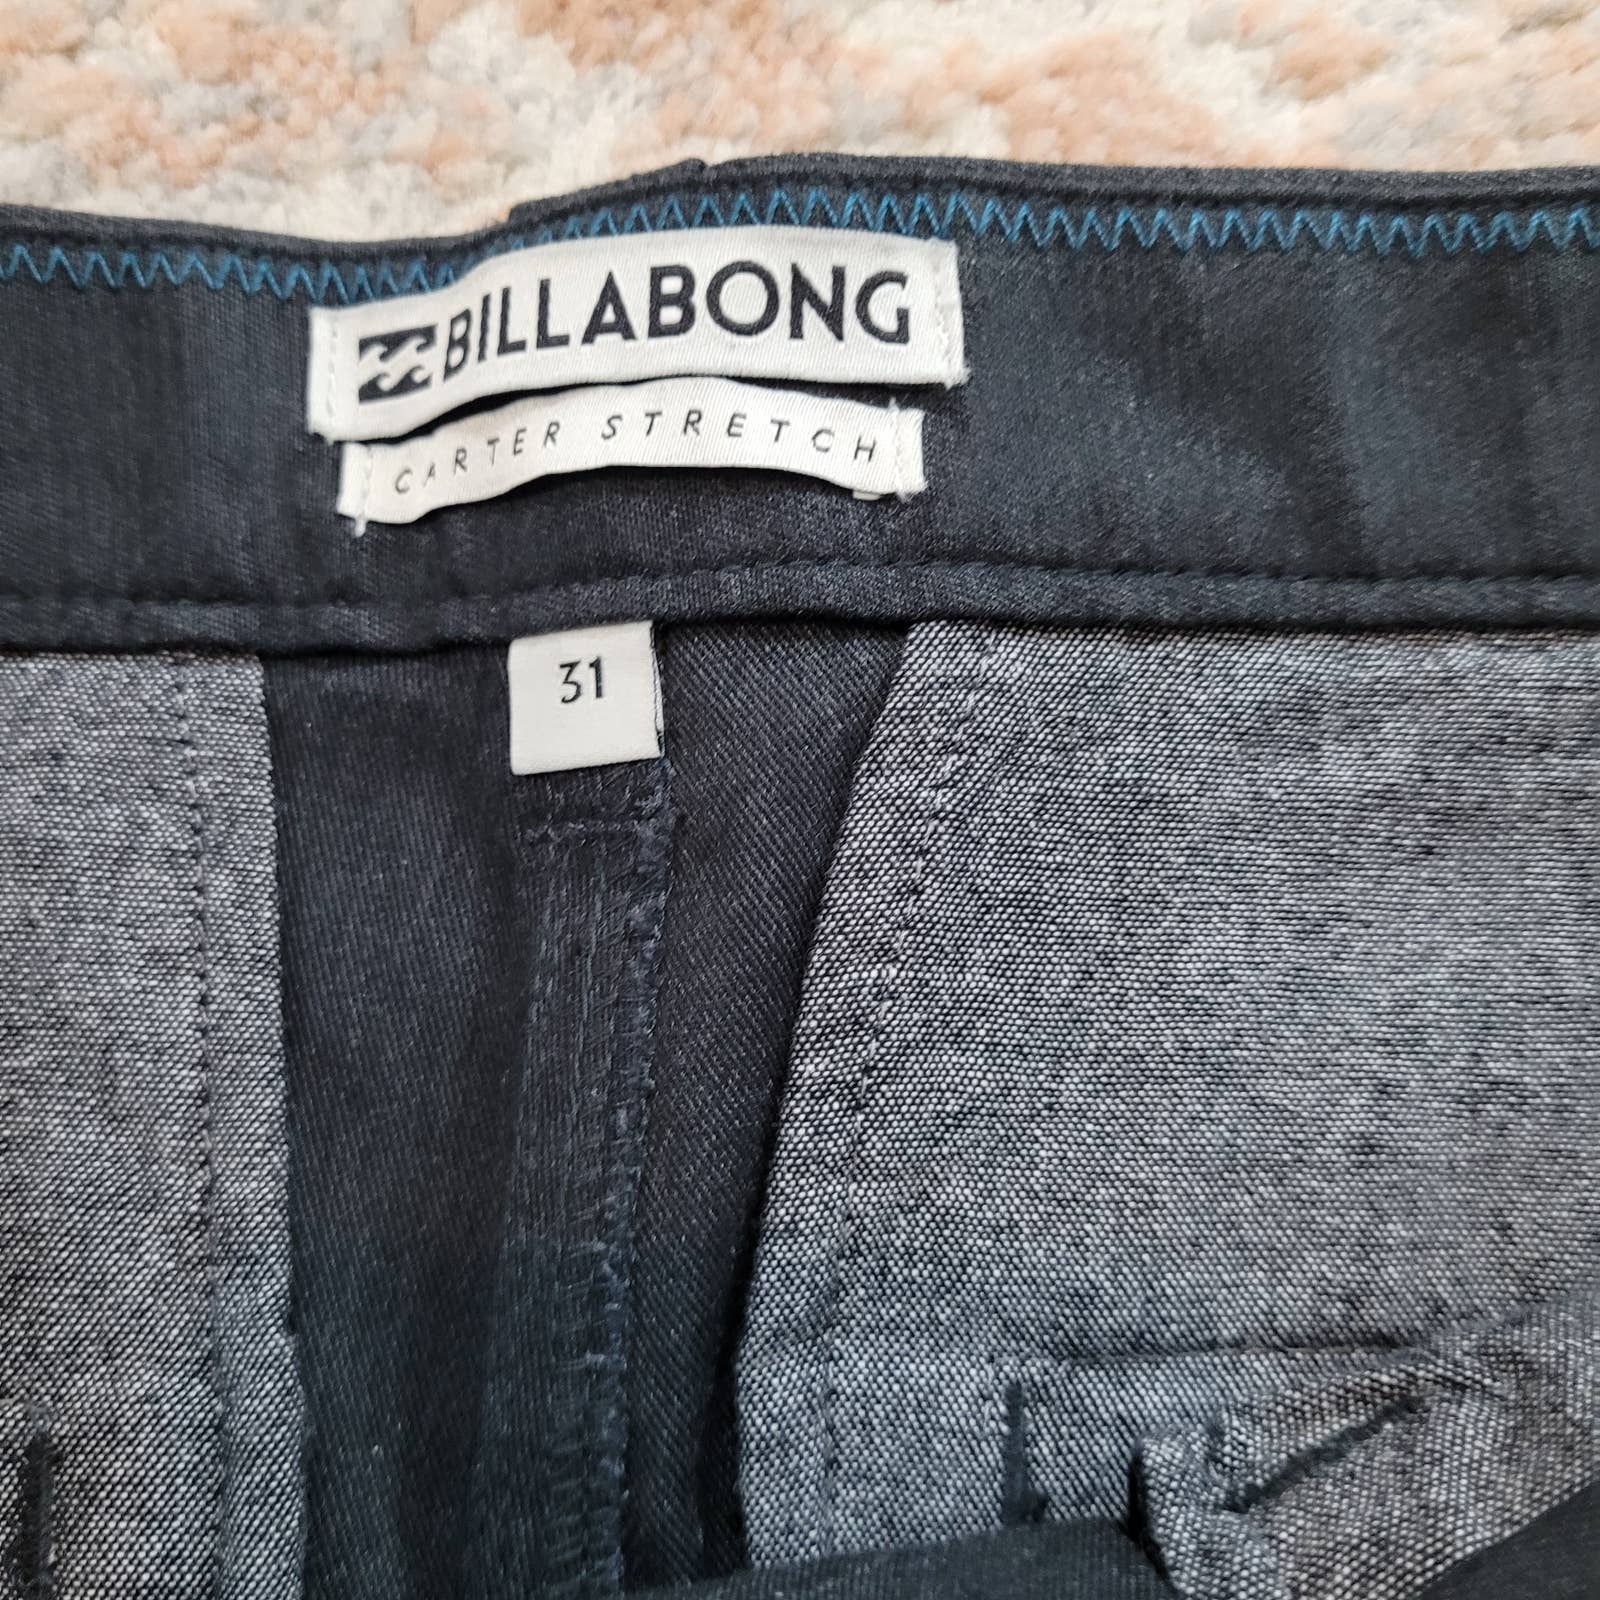 Billabong Carter Stretch Shorts - Size 31Markita's ClosetBillbong